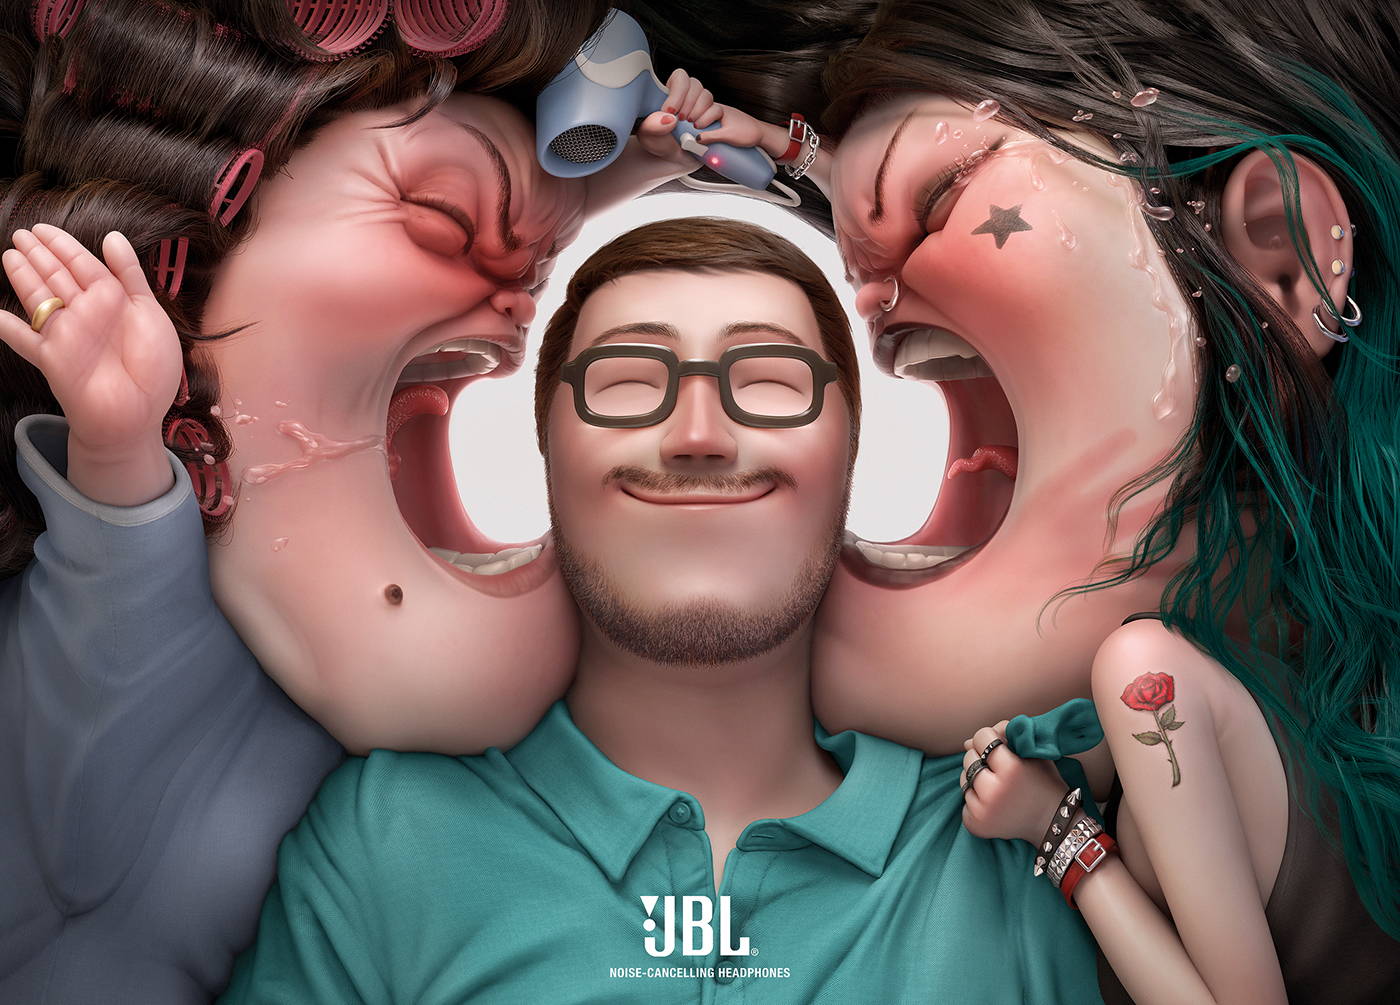 JBL Noise Cancelling Headphones - 2